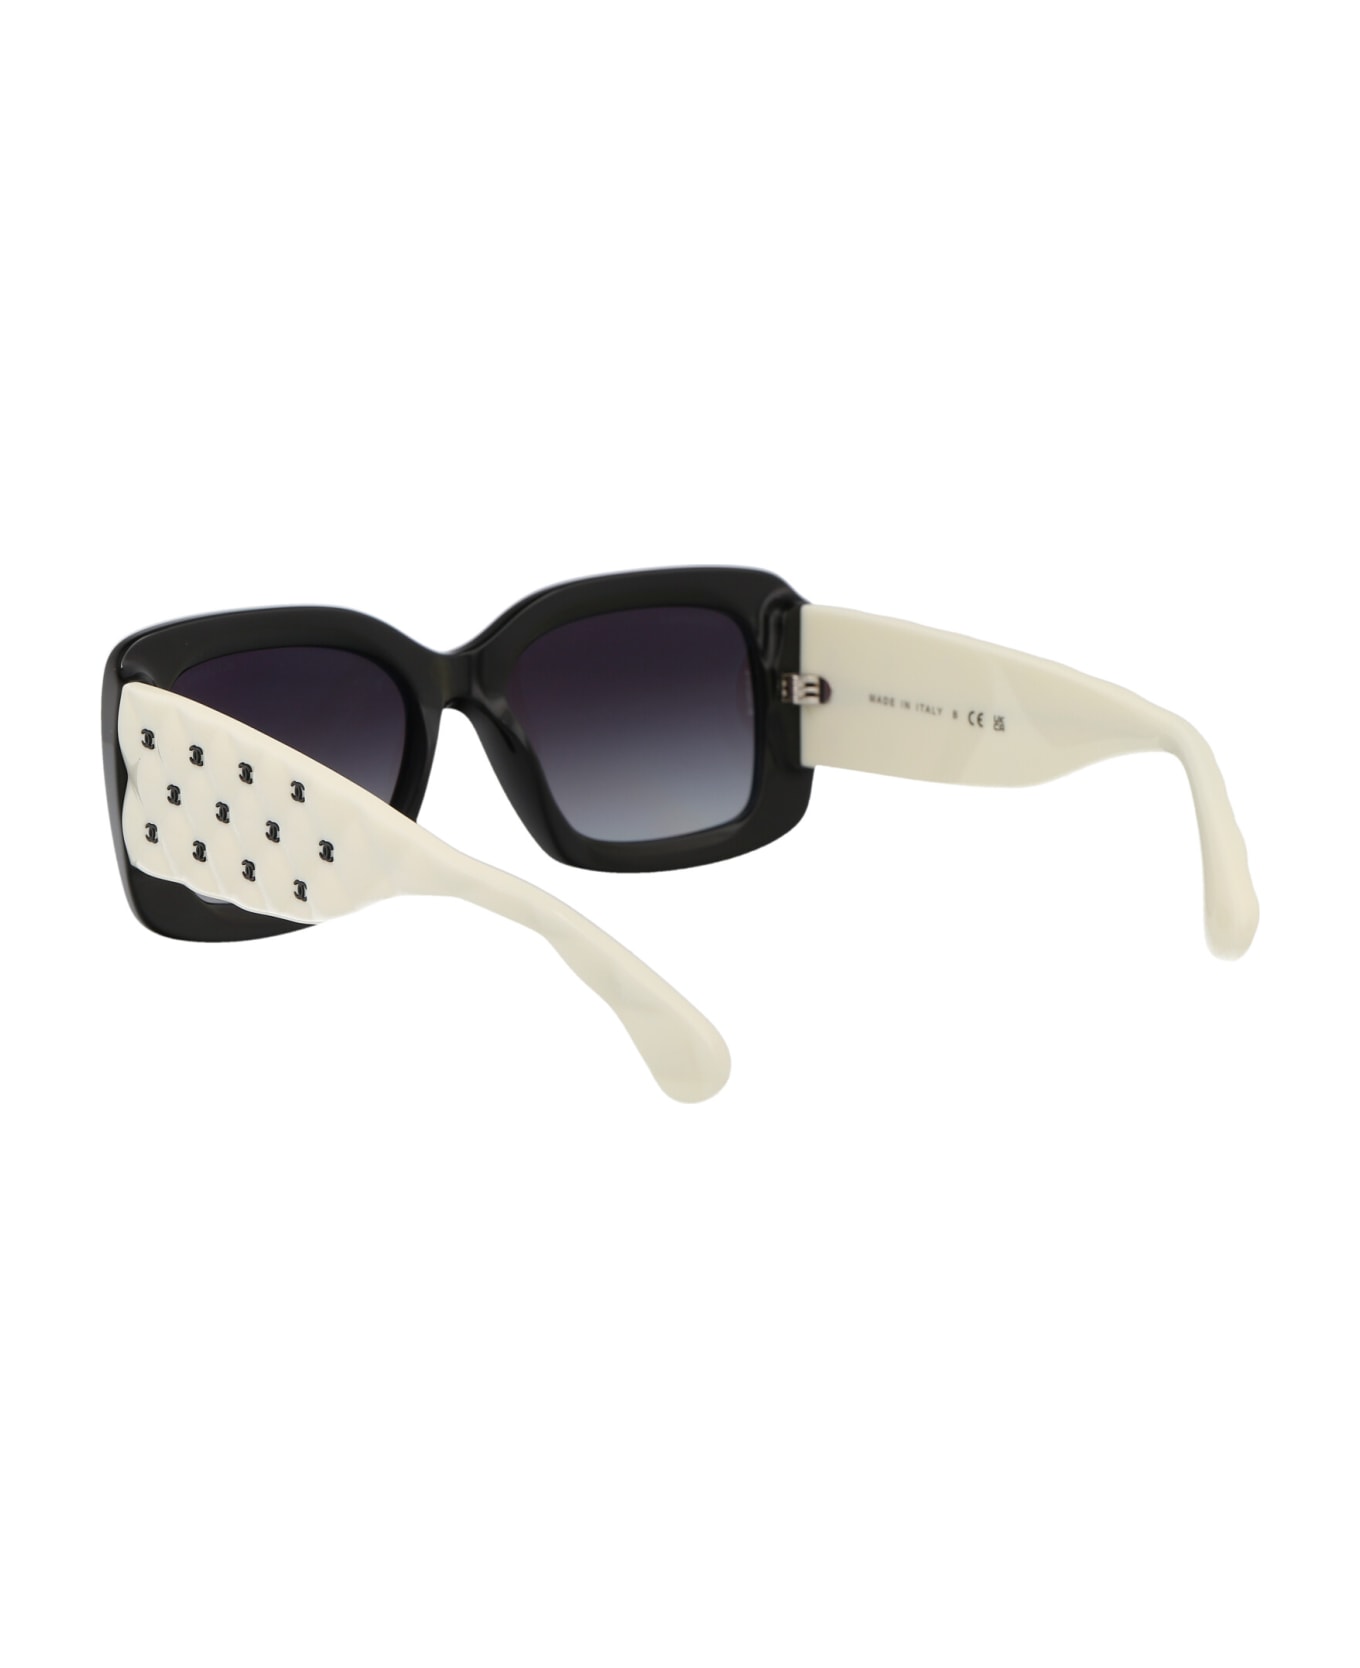 Chanel 0ch5483 Indiana Sunglasses - 1656S6 WHITE